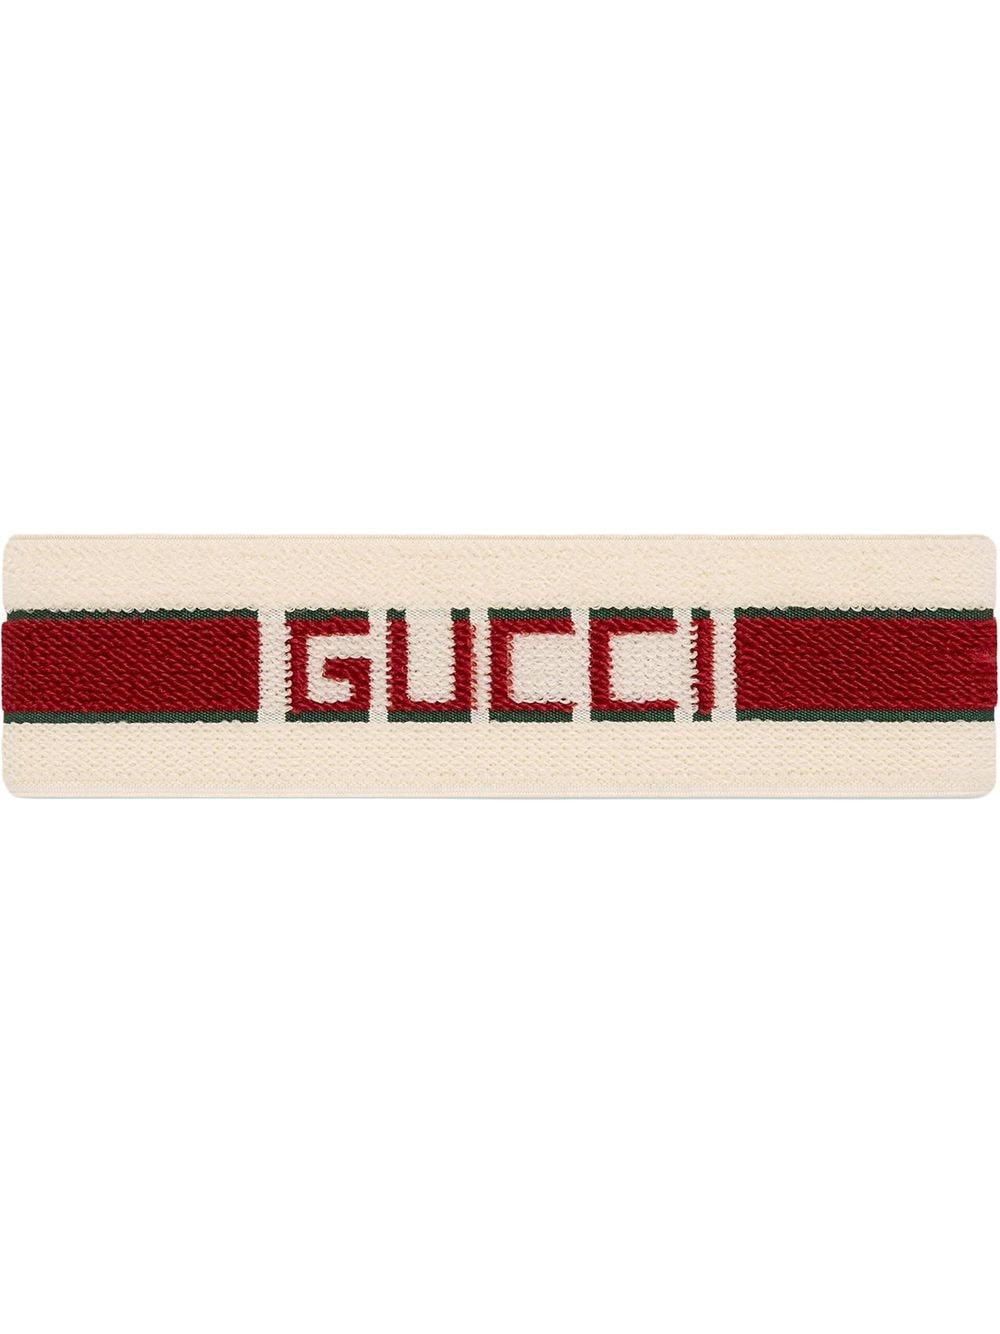 Gucci Elastic Stripe Headband in Ivory (White) - Save 56% | Lyst